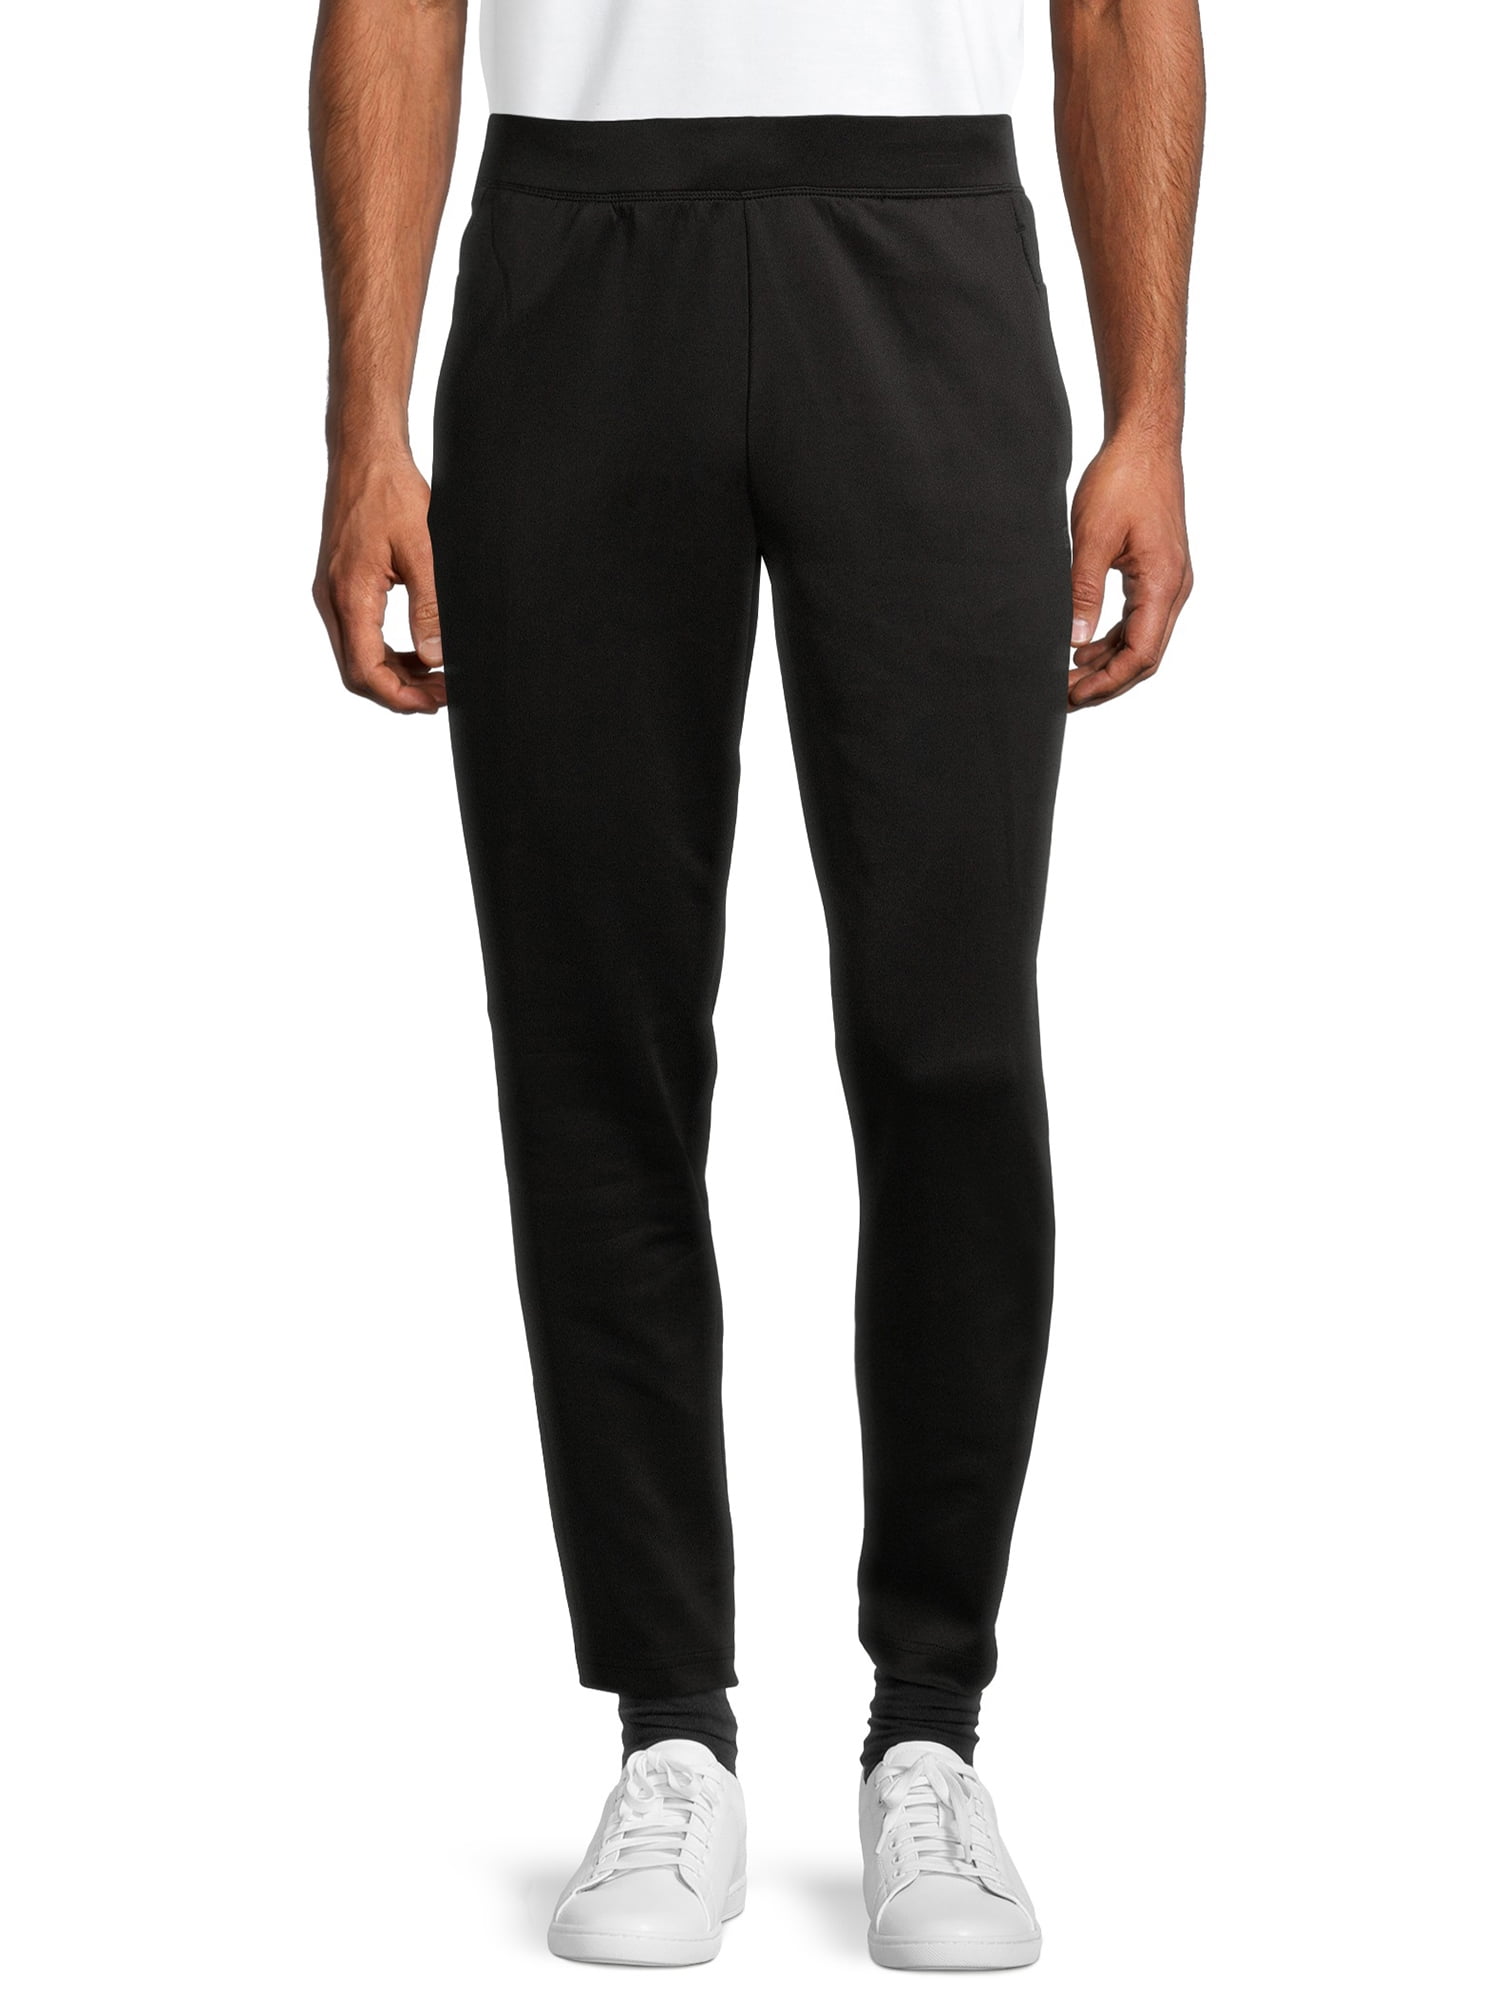 Layer 8 Men's Circular Knit Athletic Pants - Walmart.com